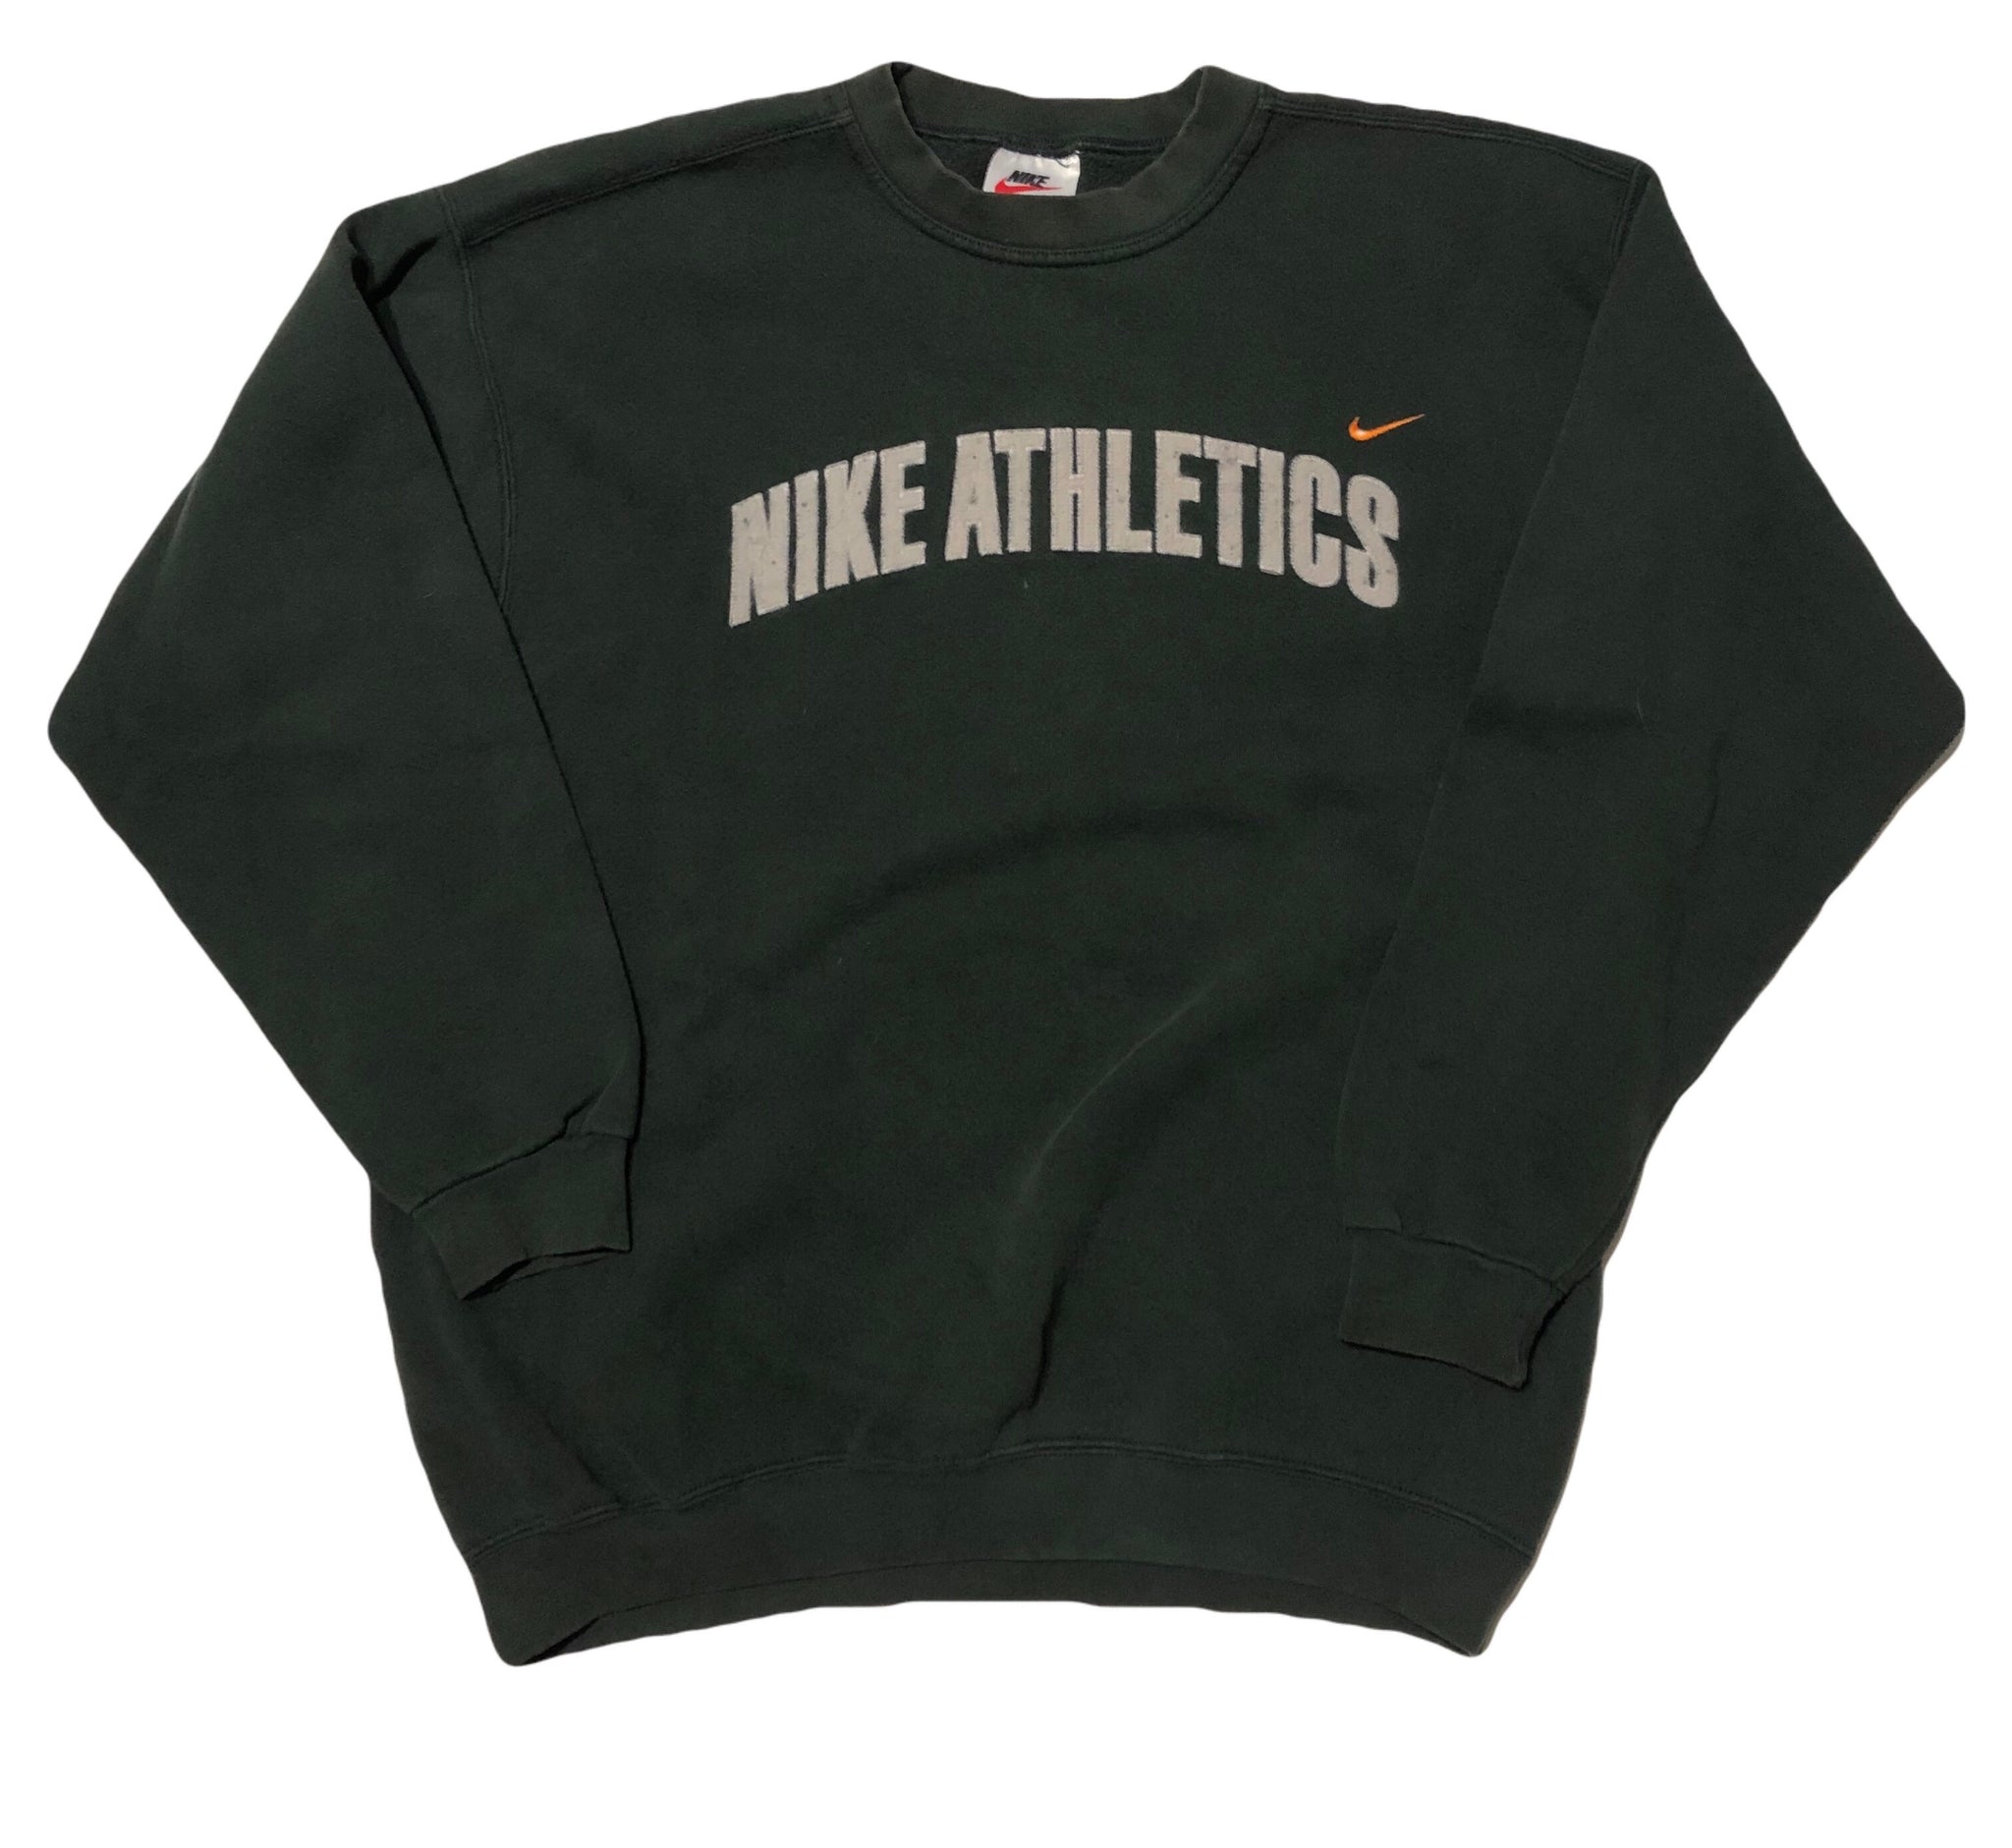 Vintage 90s Nike Athletic Sweatshirt Size Large - Beyond 94